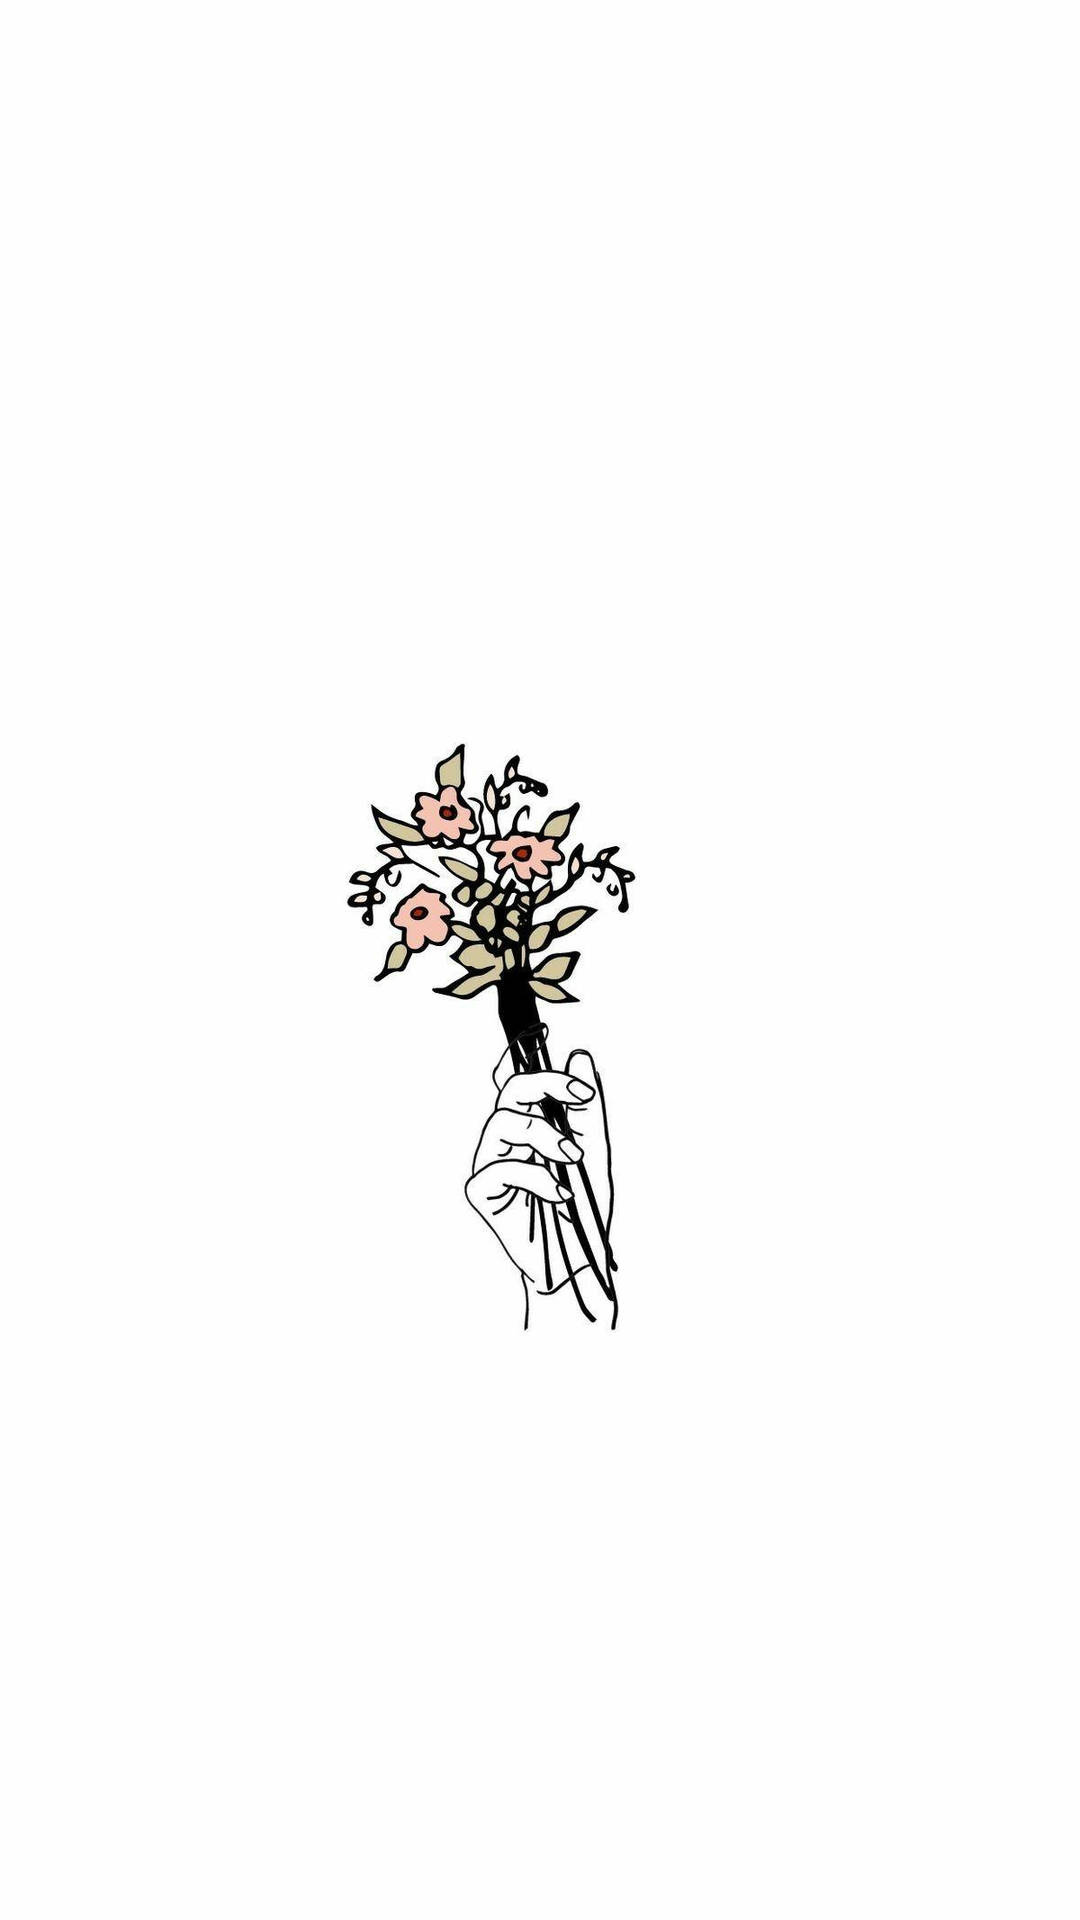 Minimalist Aesthetic Hand Holding Flowers